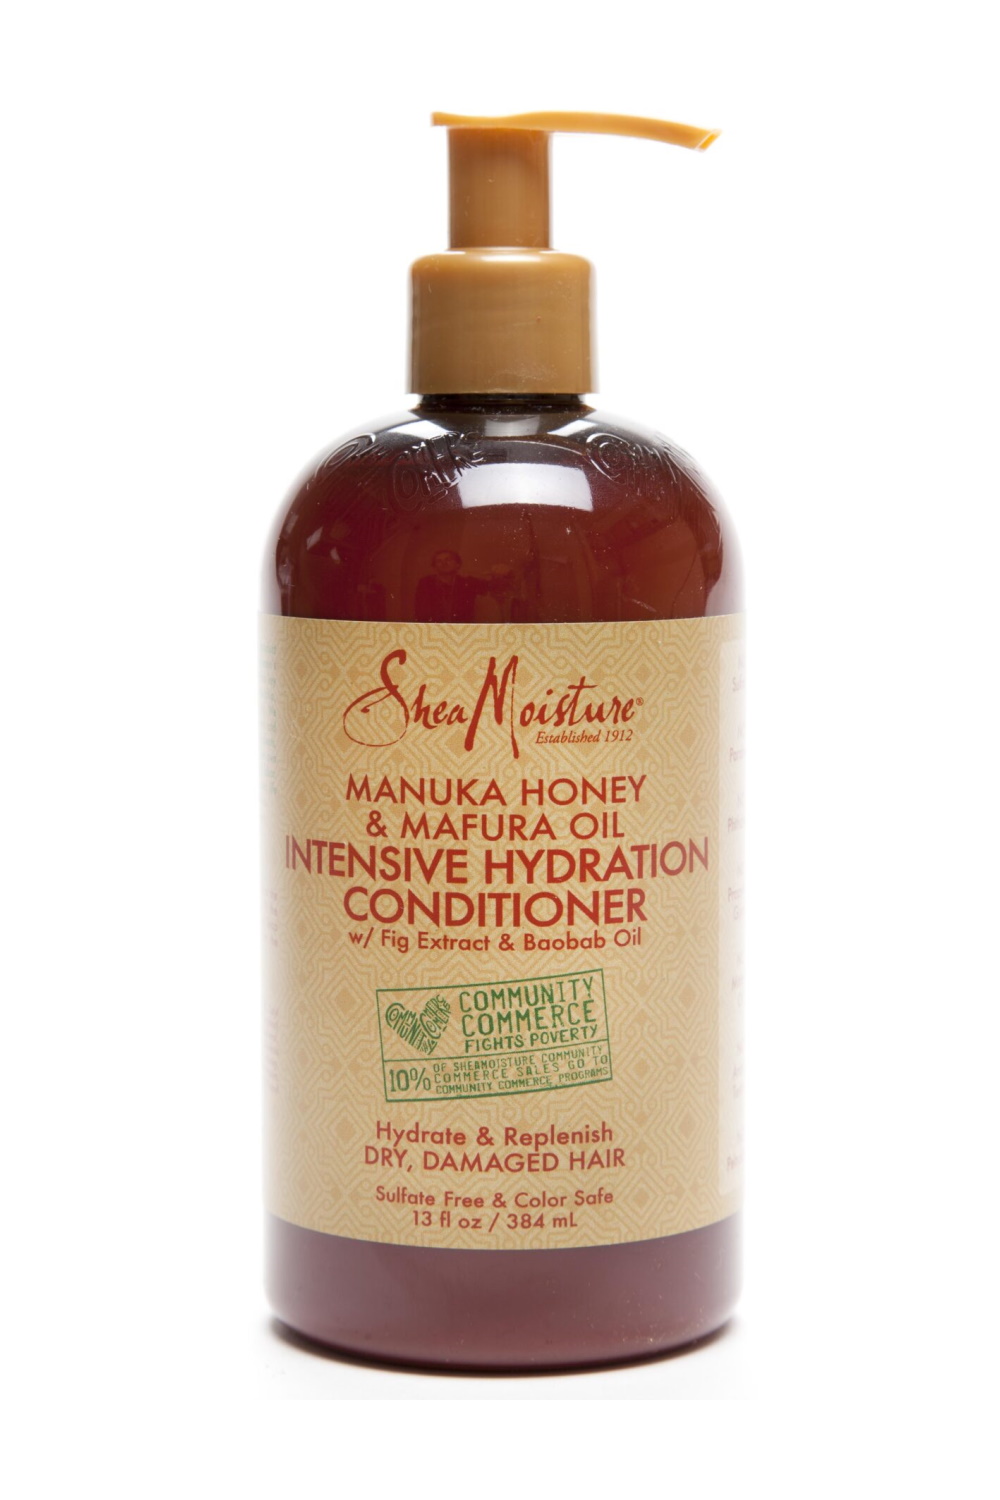 Product Review: Shea Moisture Manuka Honey & Mafura Oil Intensive